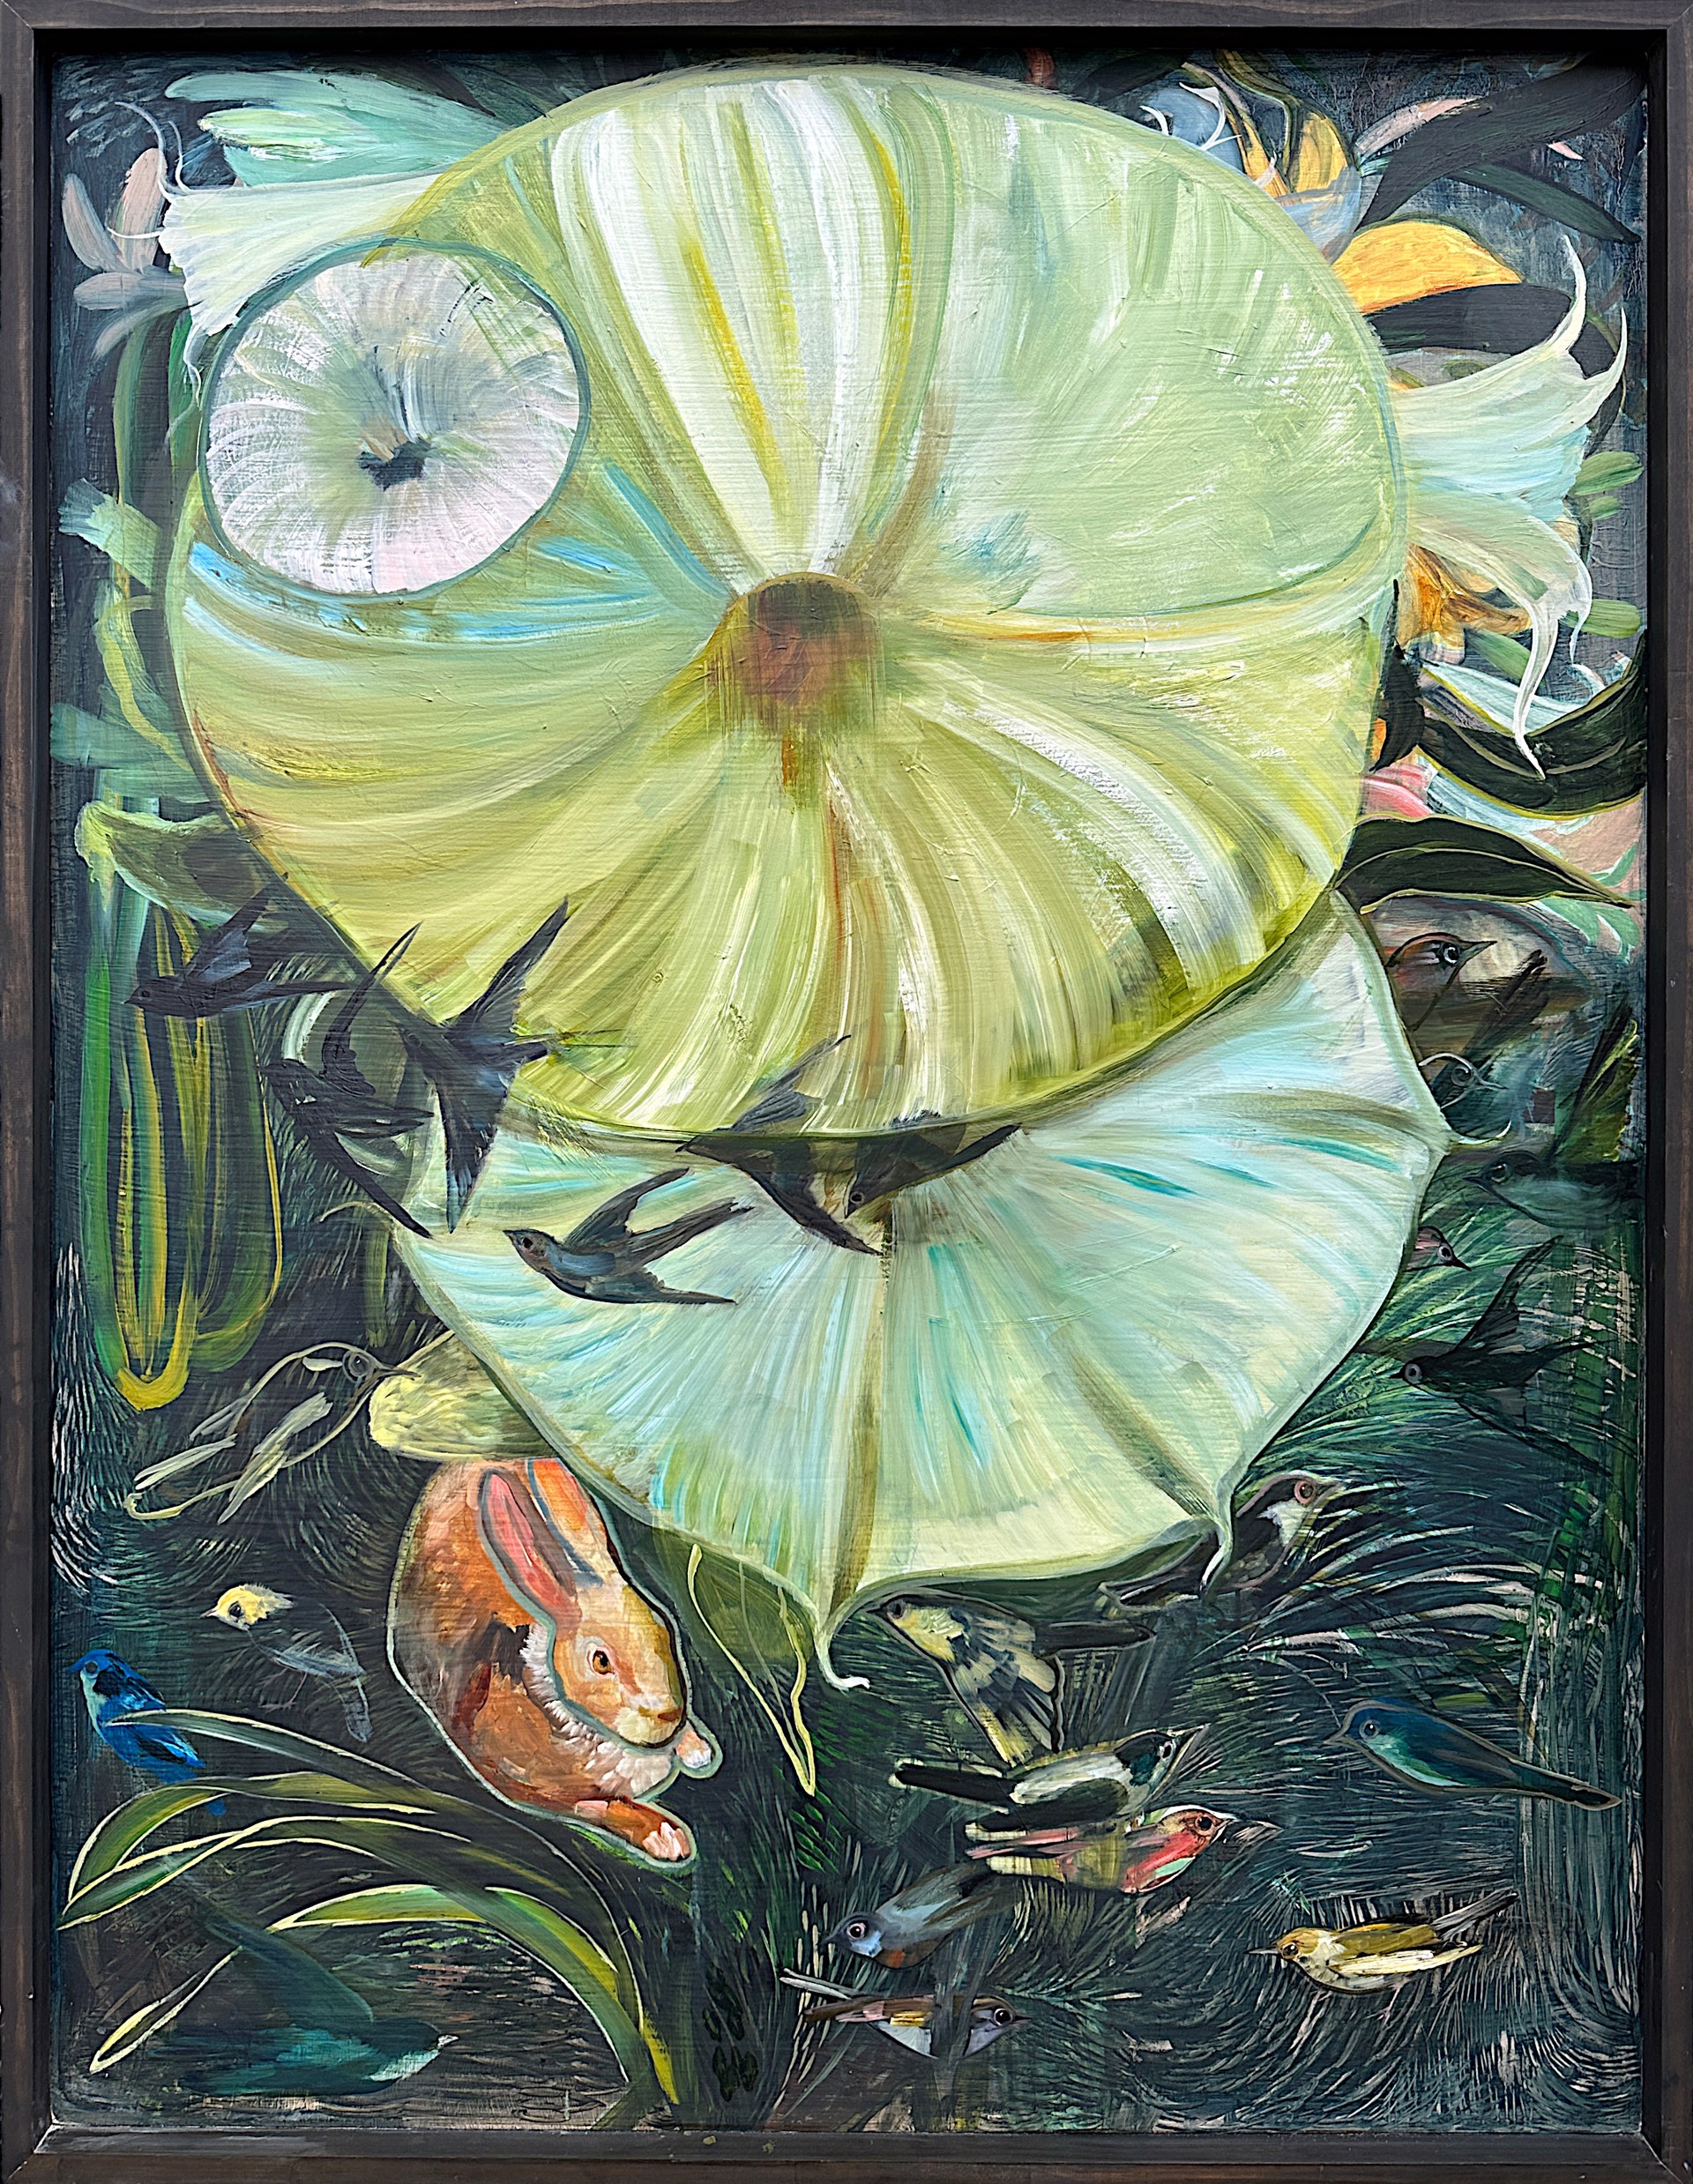 Moonflower Garden by Diane Kilgore Condon